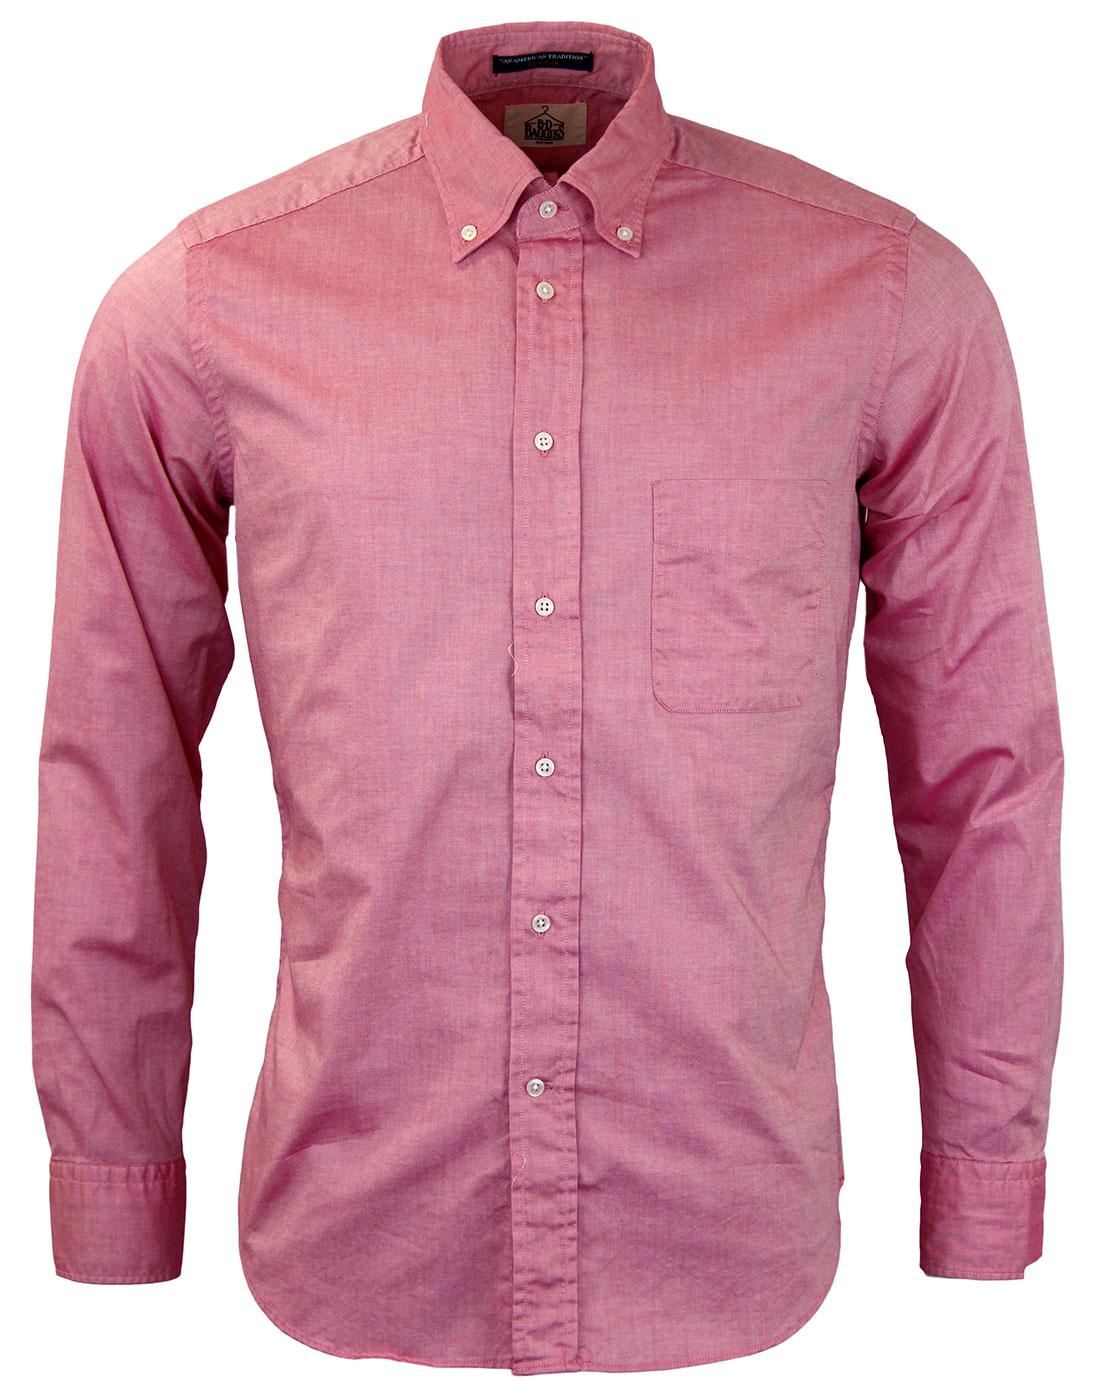 B D BAGGIES Bradford Retro Mod L/S Oxford Shirt in Pink